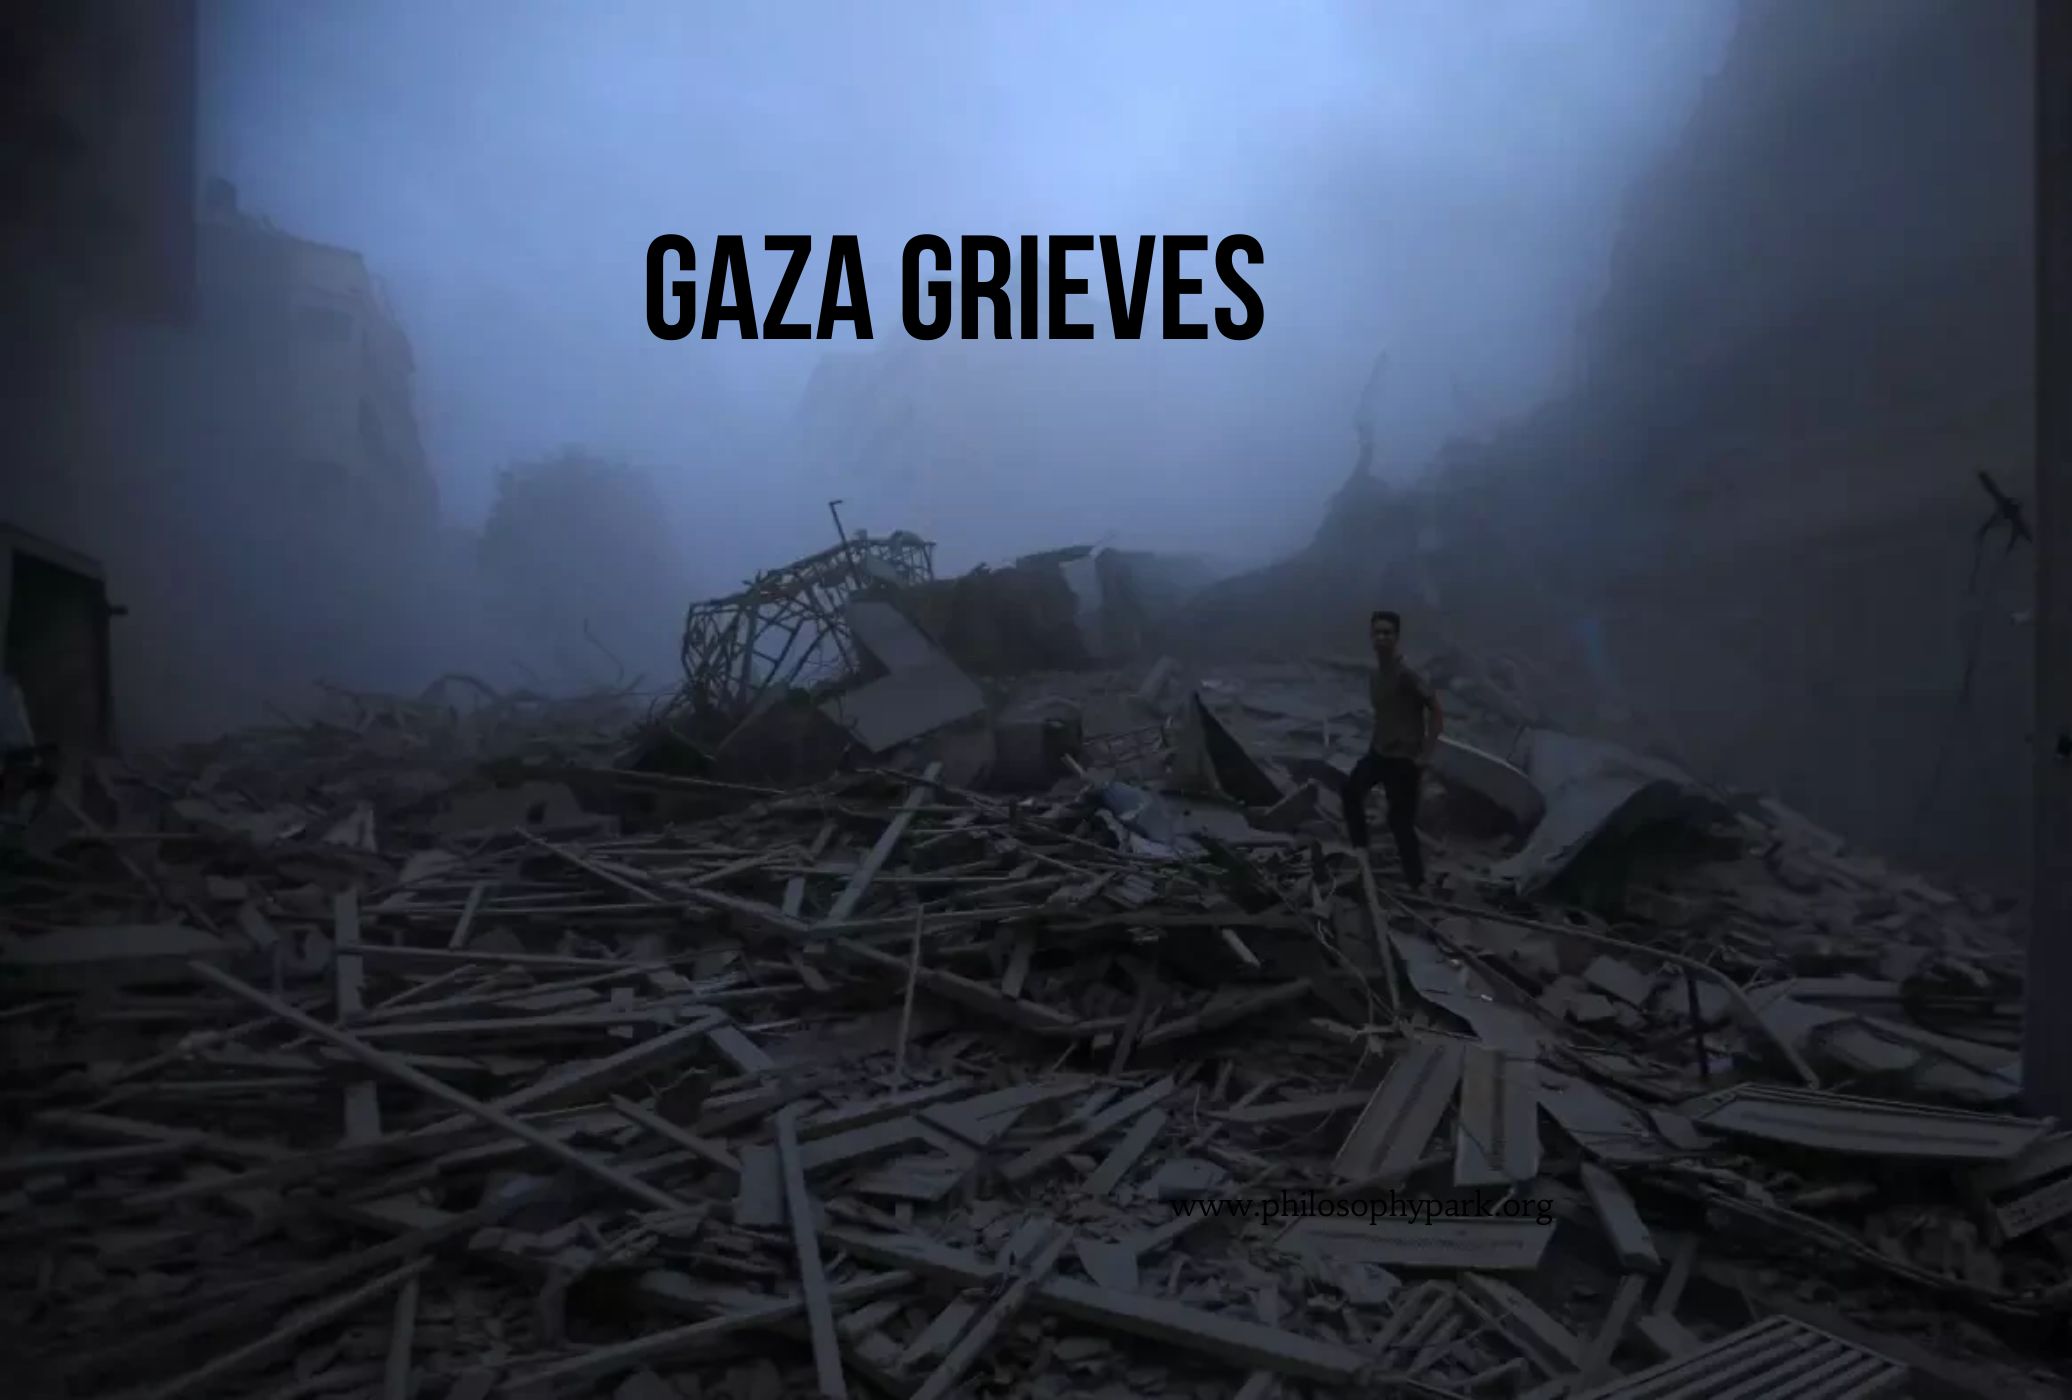 Gaza grieves